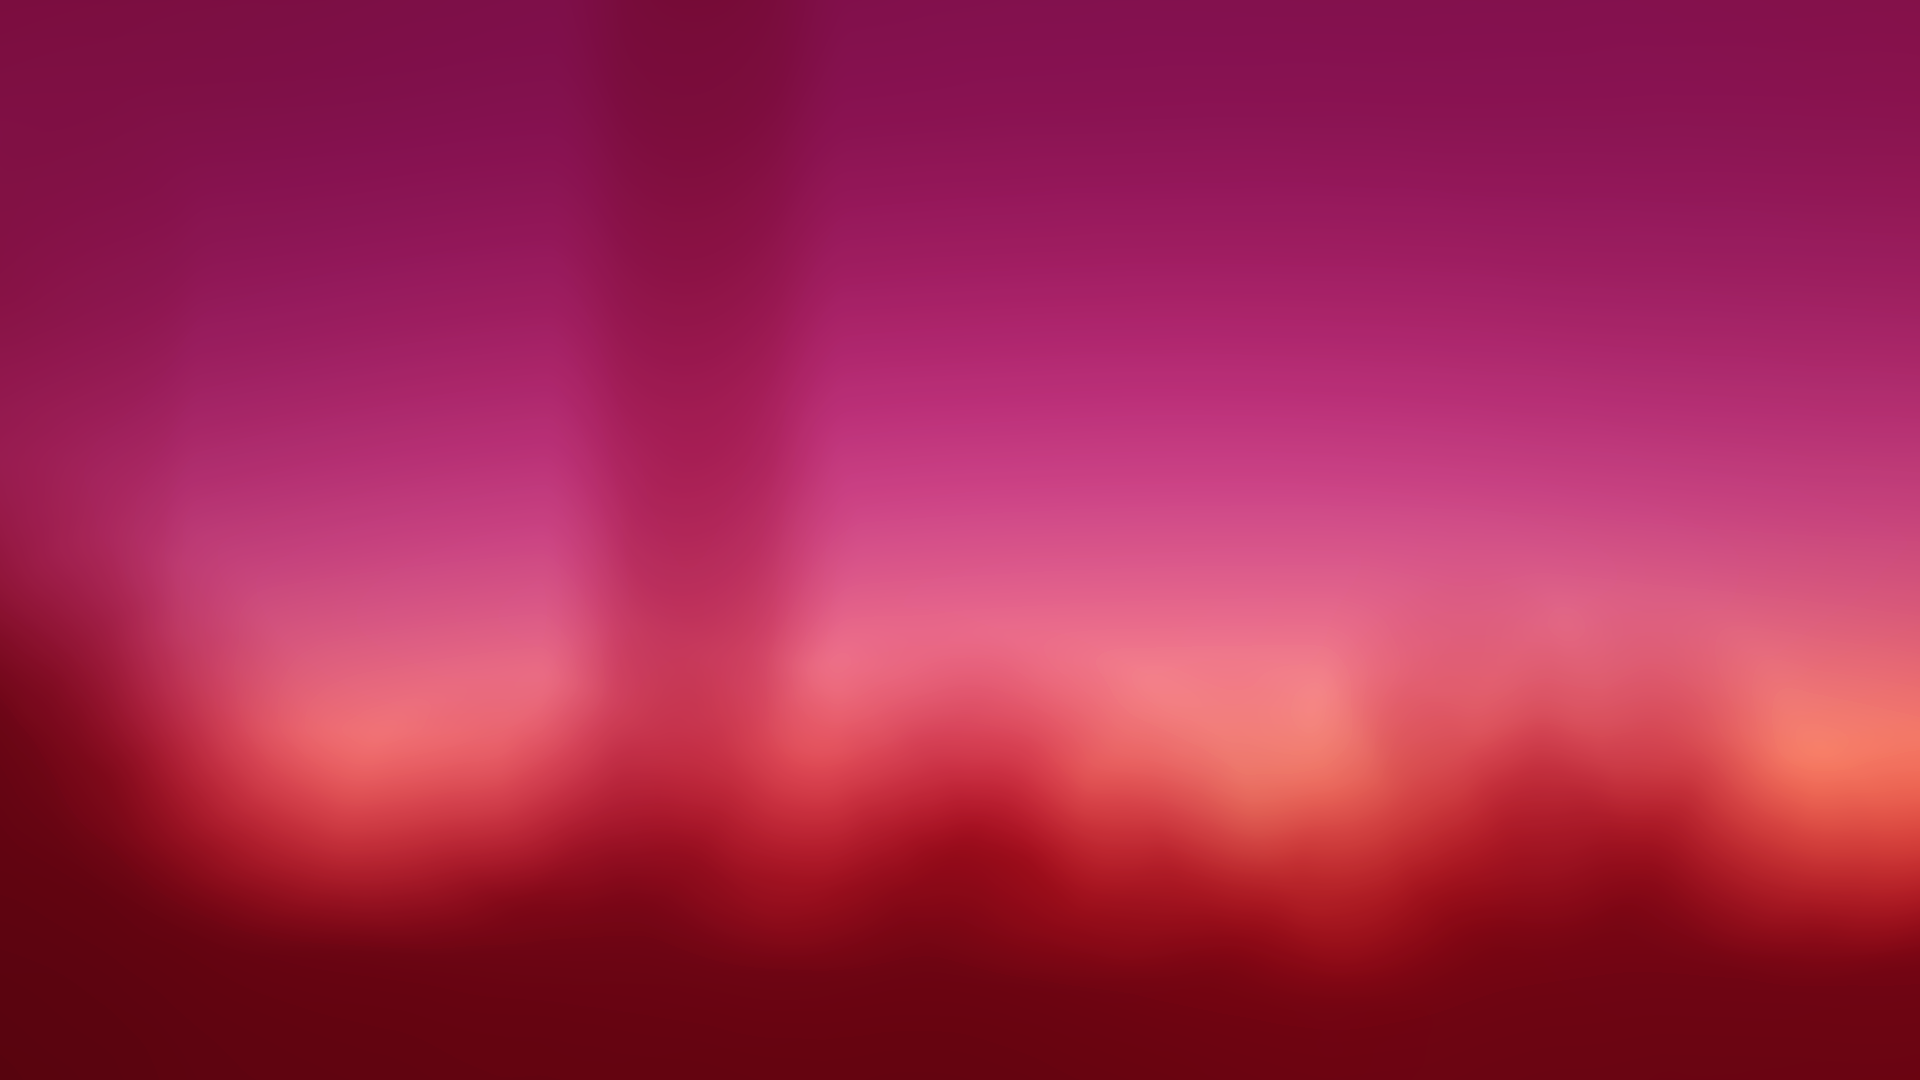 General 1920x1080 blurred gradient red pink